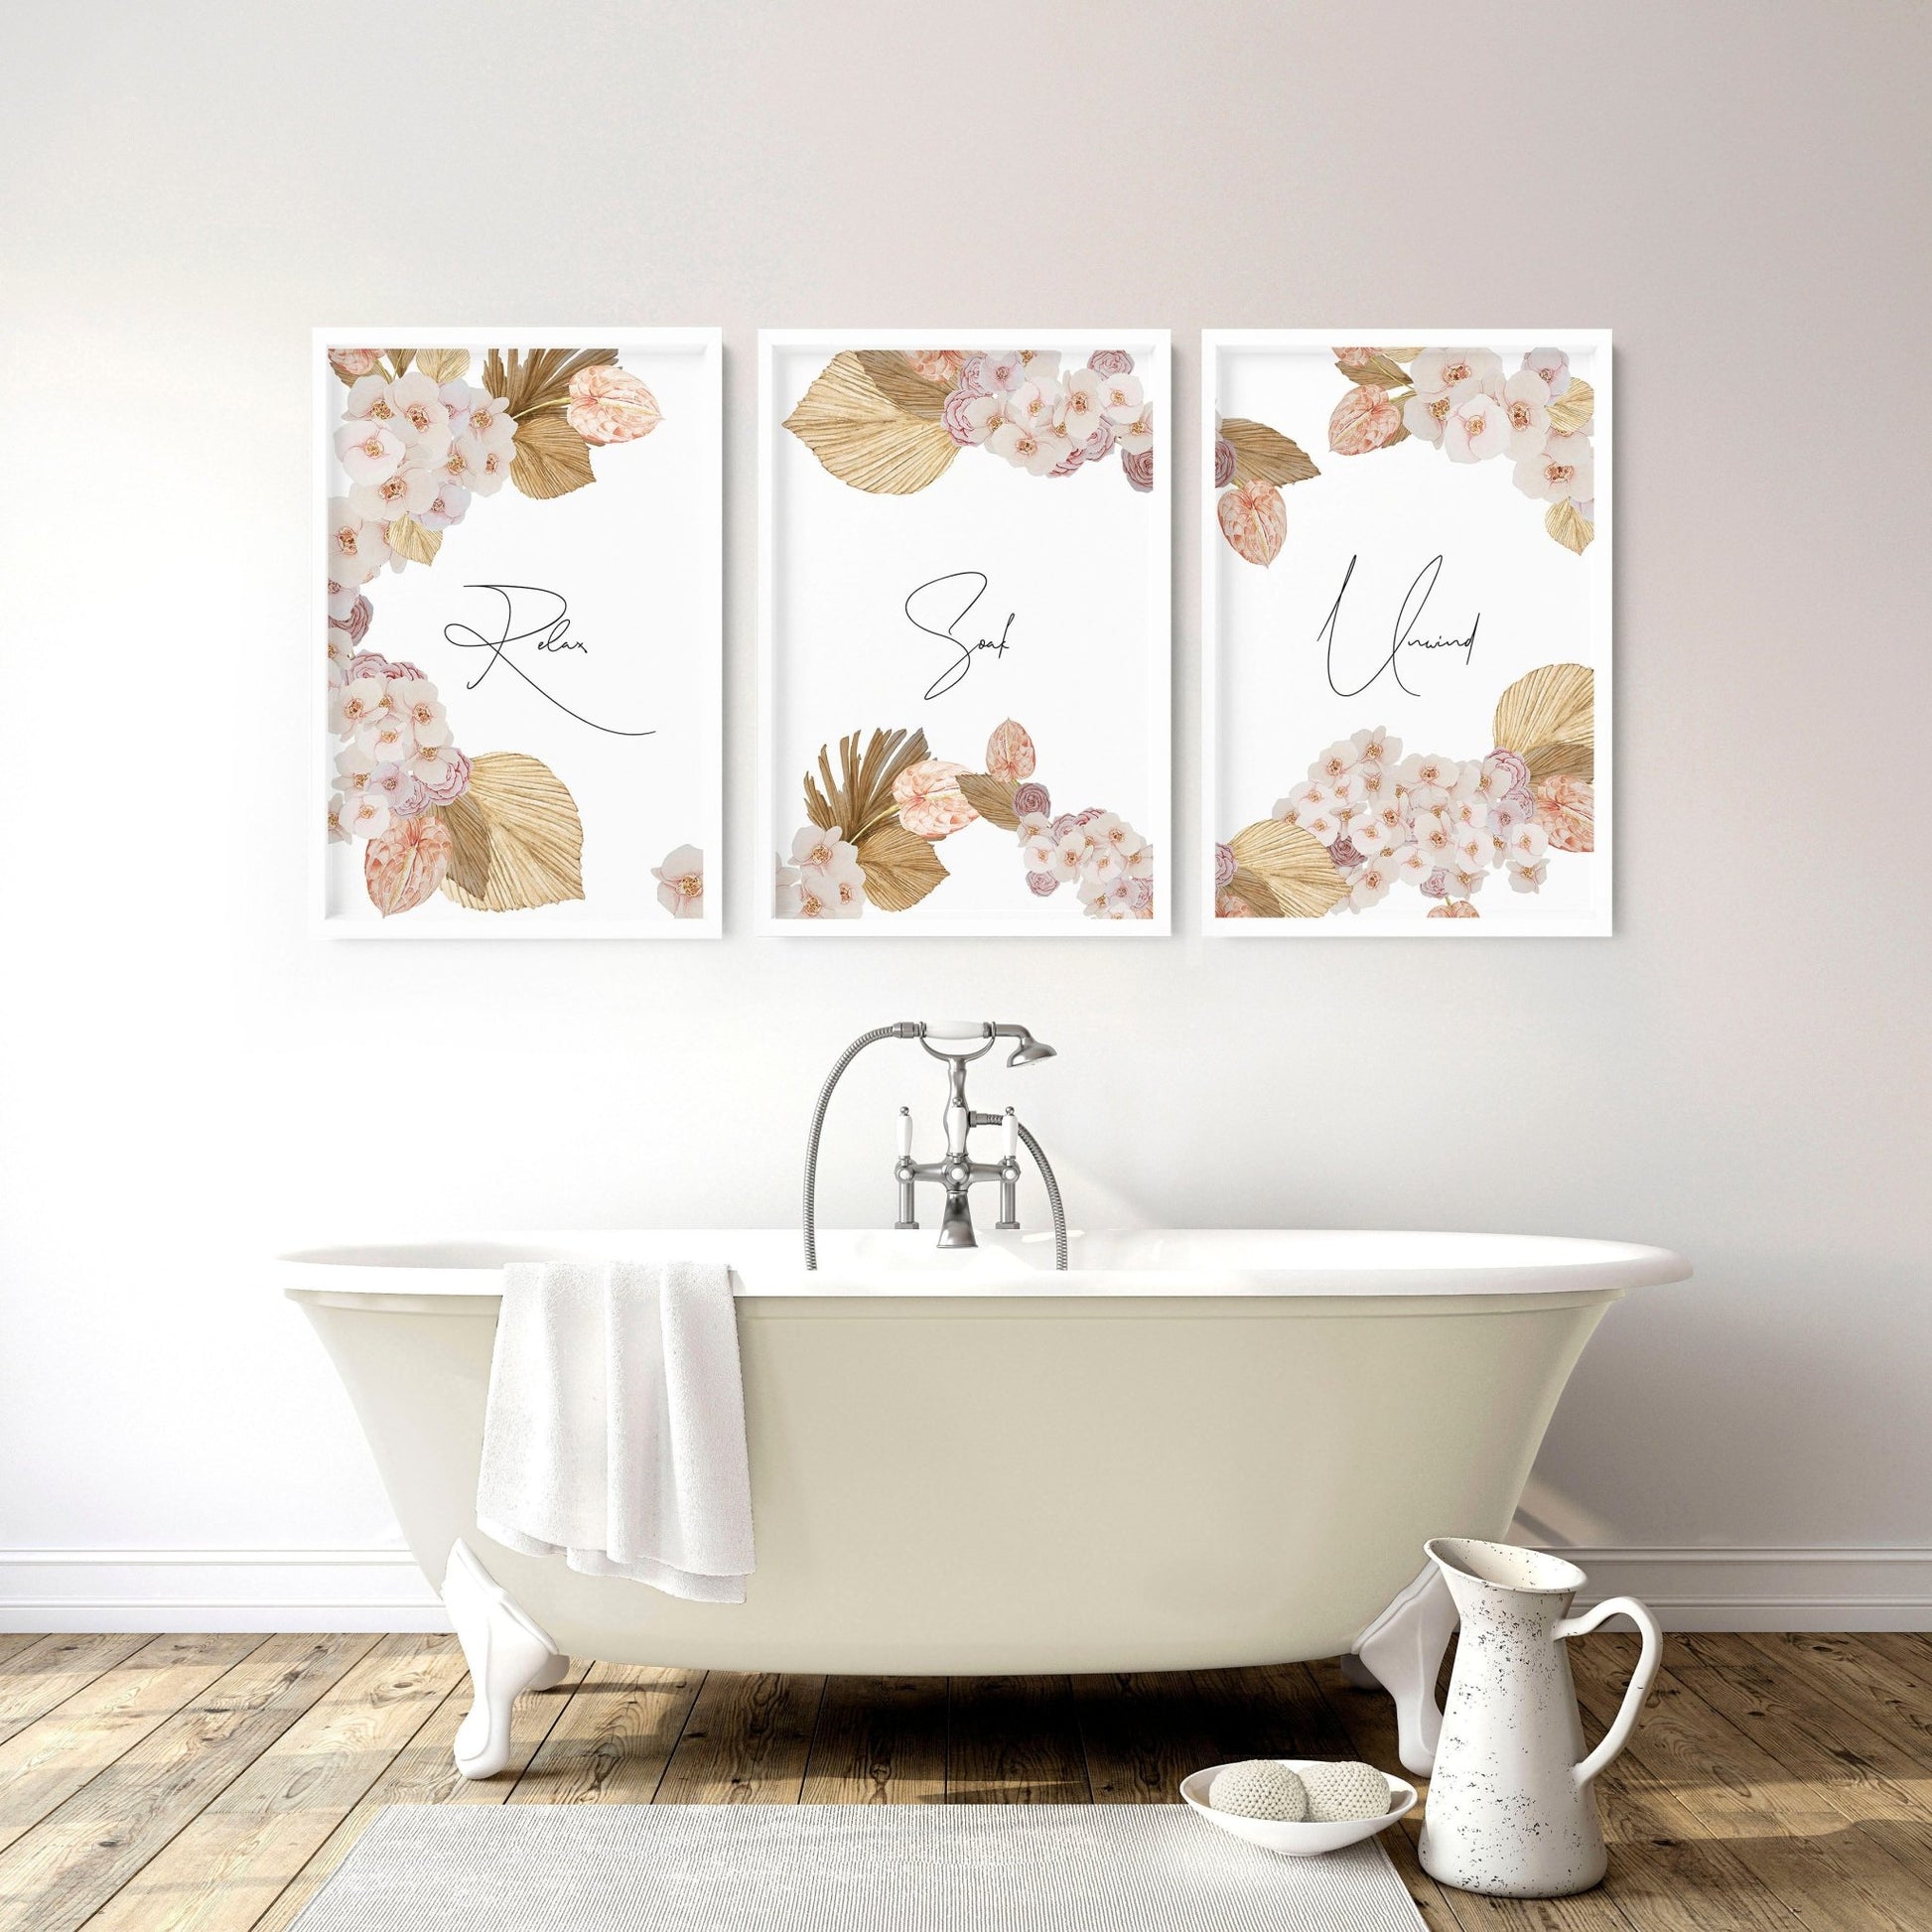 Bathroom wall decor art | Set of 3 wall art